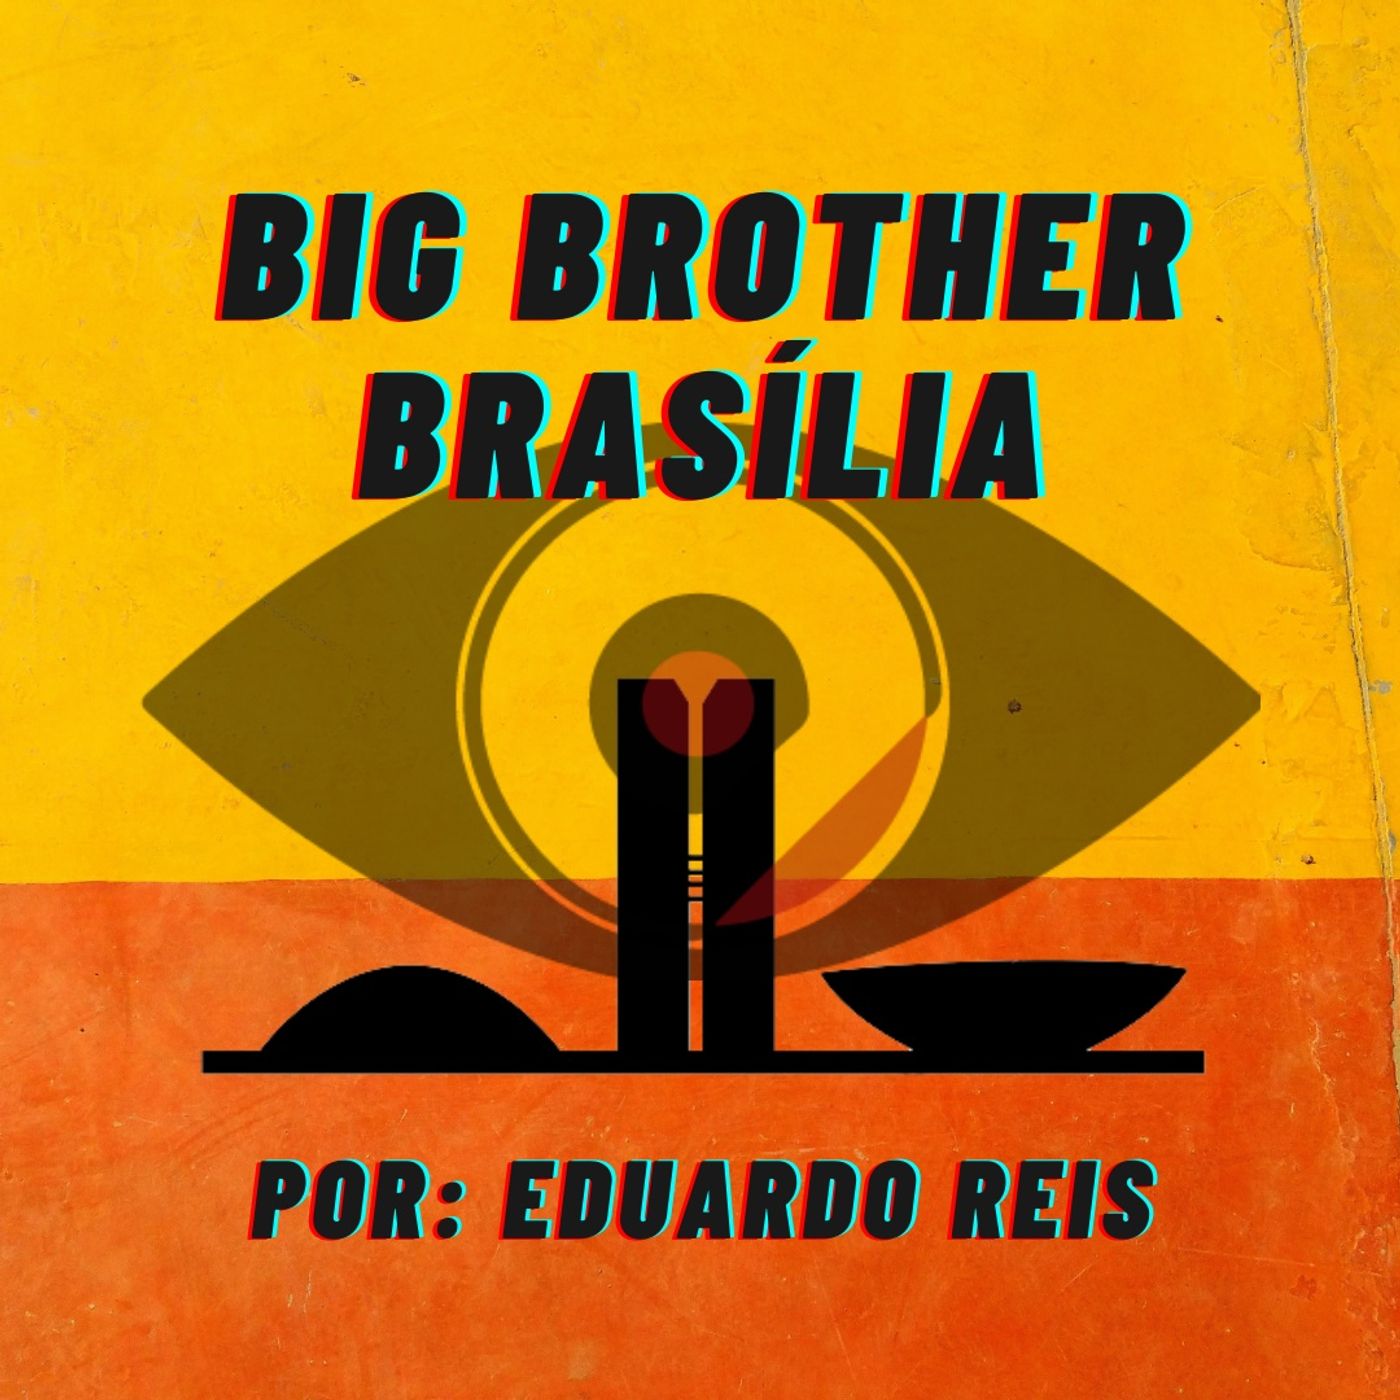 Big Brother Brasília